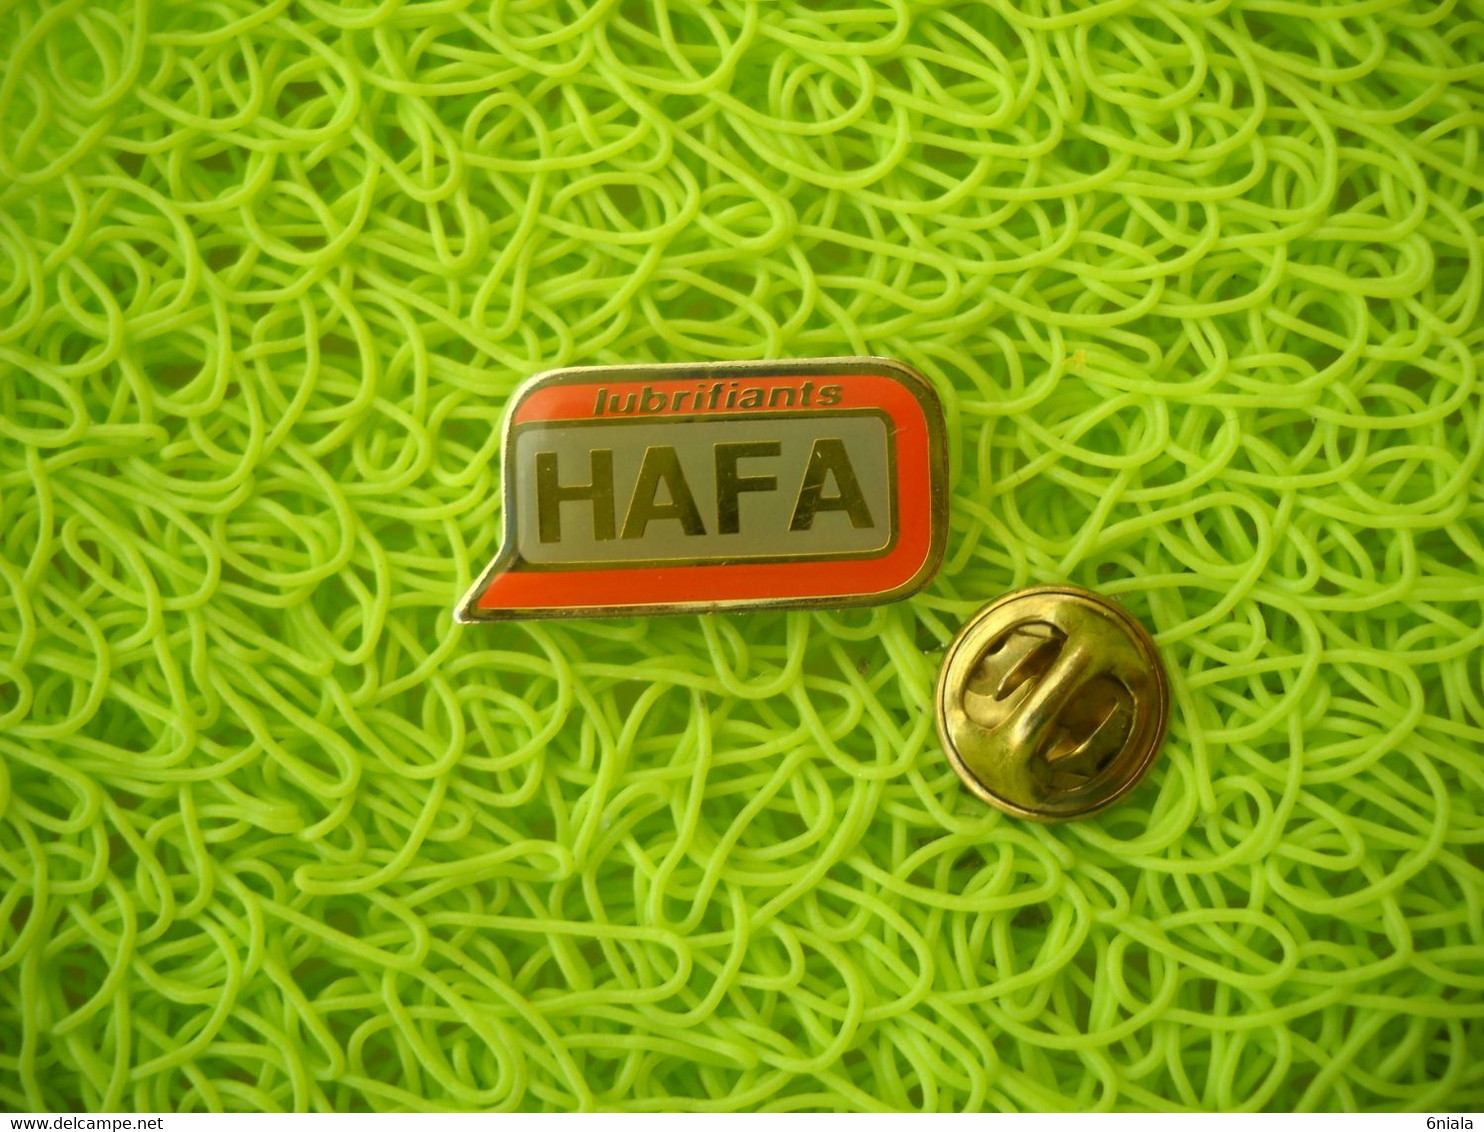 2024  PINS  Pin's   Lubrifiants  HAFA  ( Huile Voiture ) - Fuels